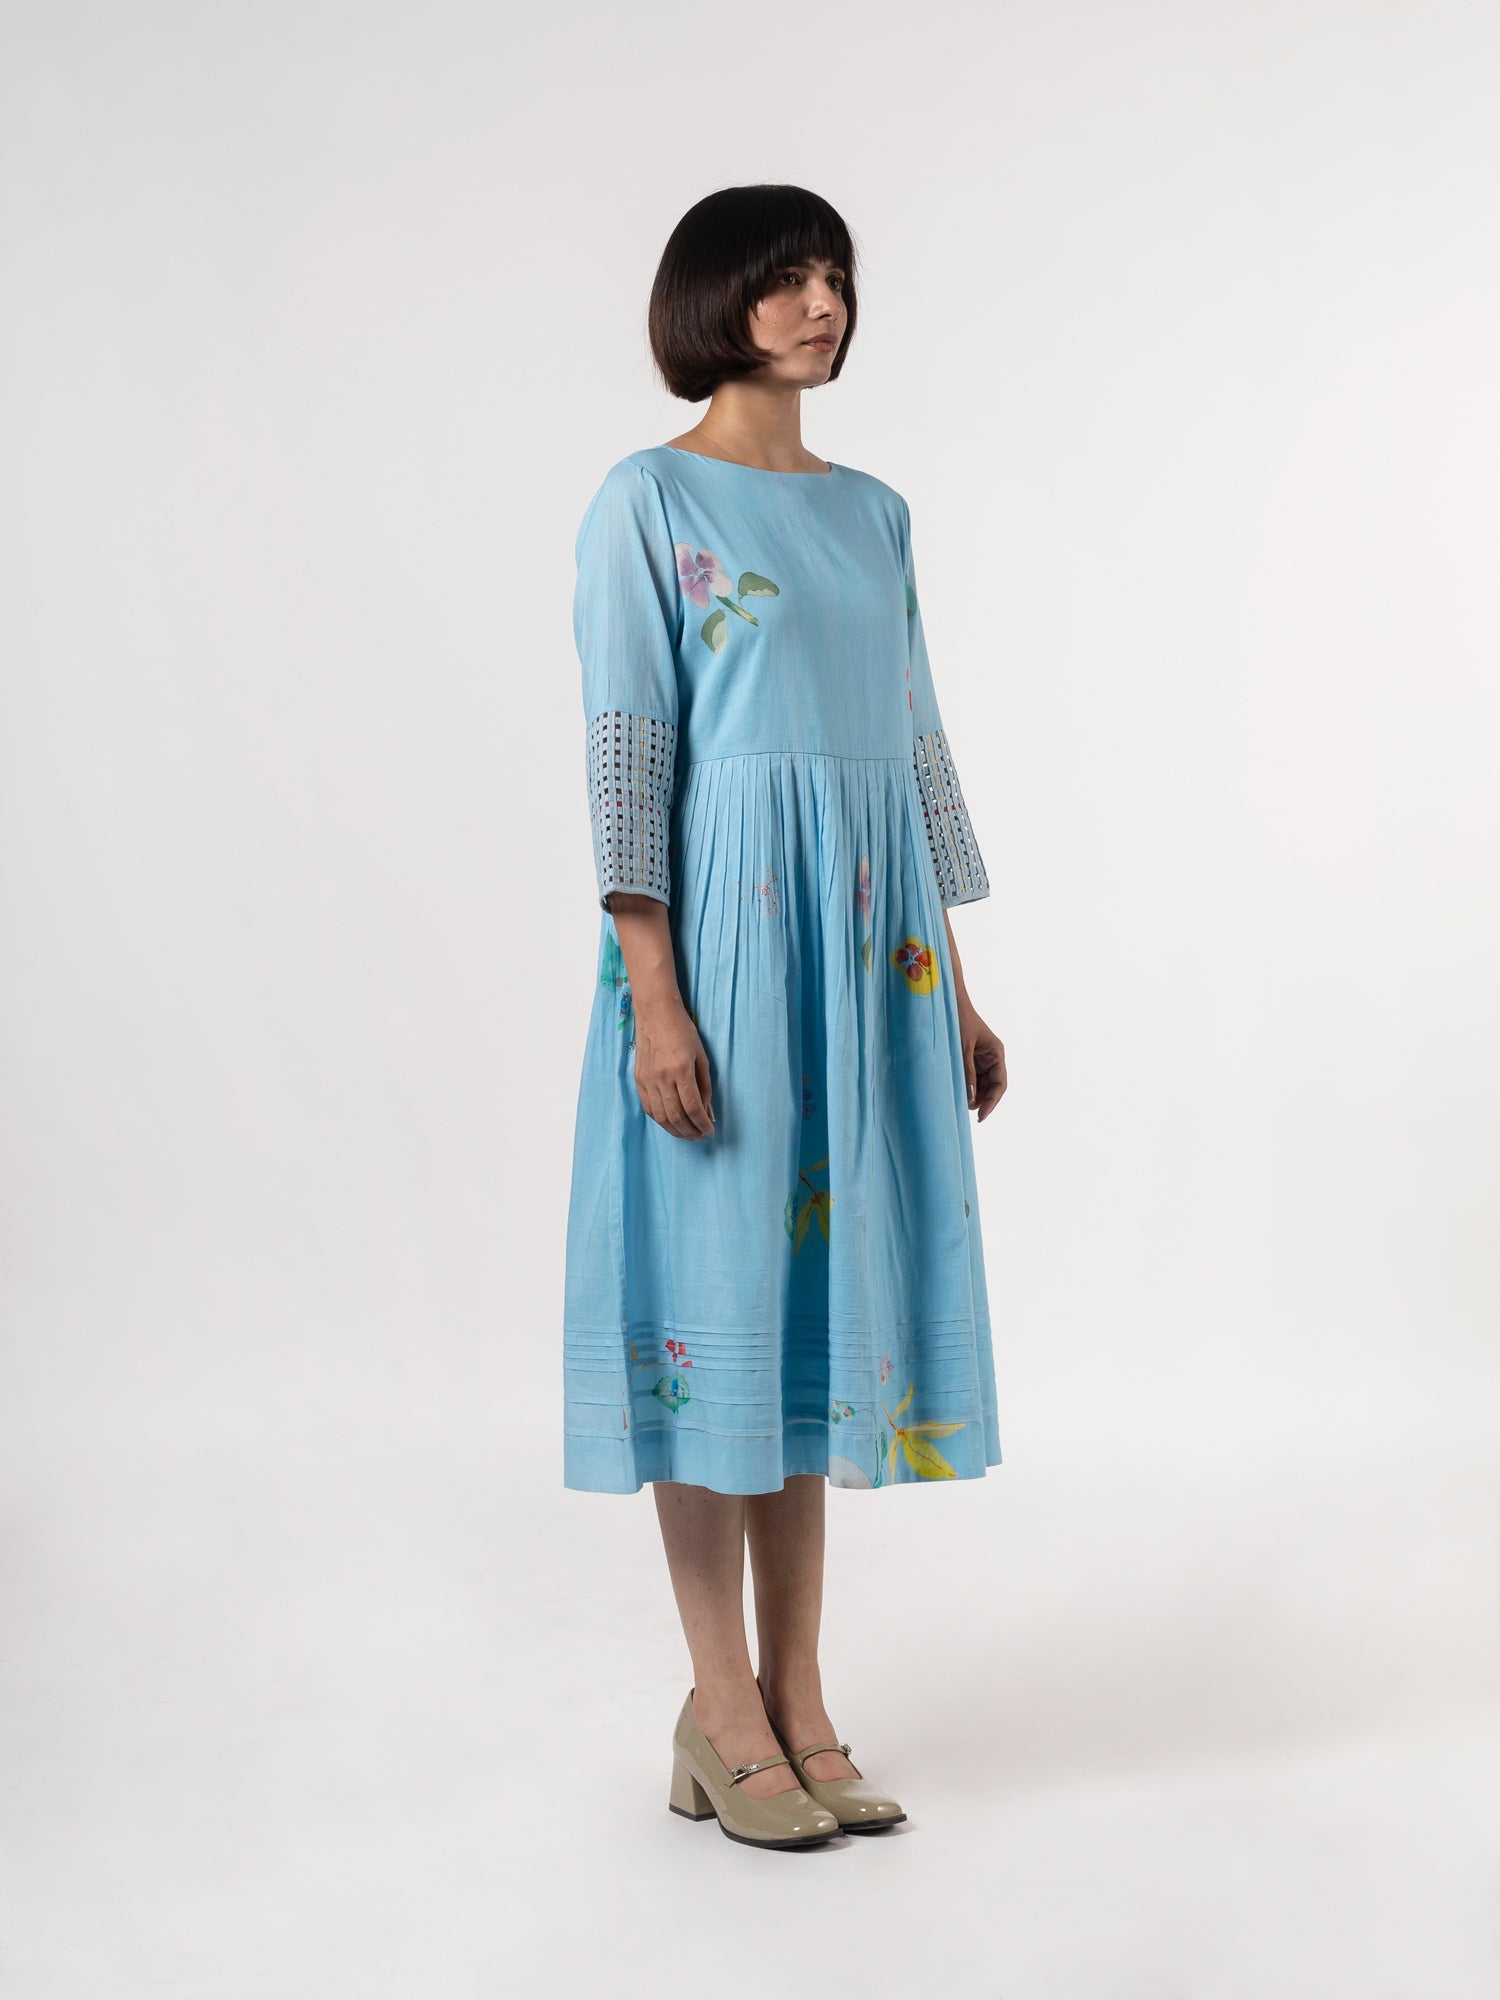 Rafael Blue Dress - CiceroniDressesShades of India